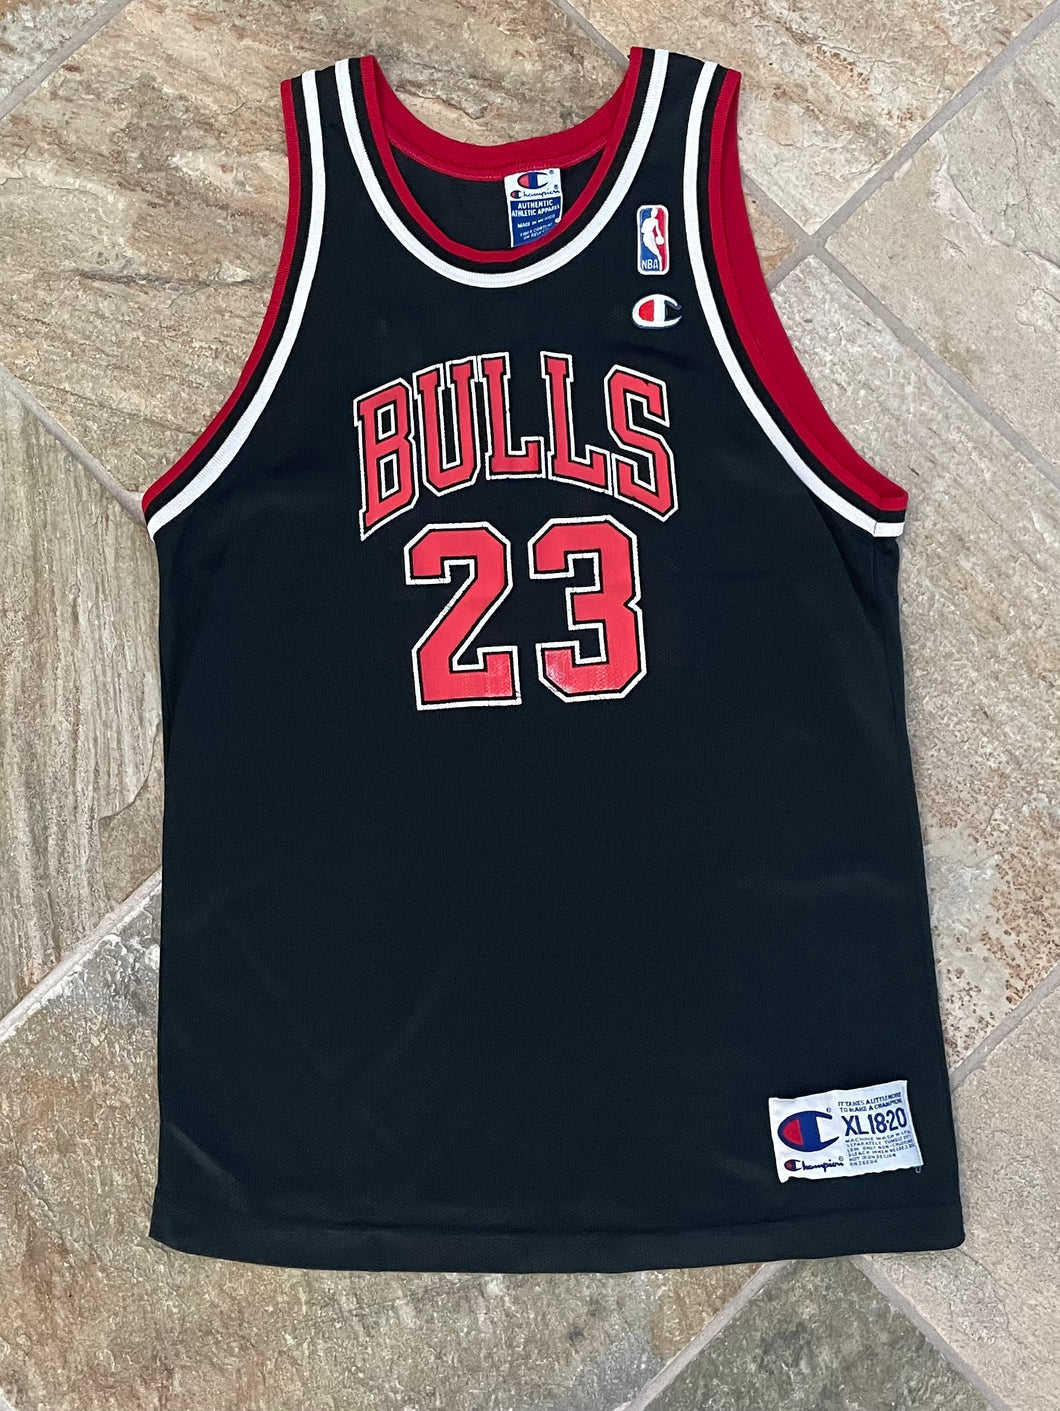 Chicago Bulls Michael Jordan Jersey 23 Red XL 18-20 Vintage 90's Youth